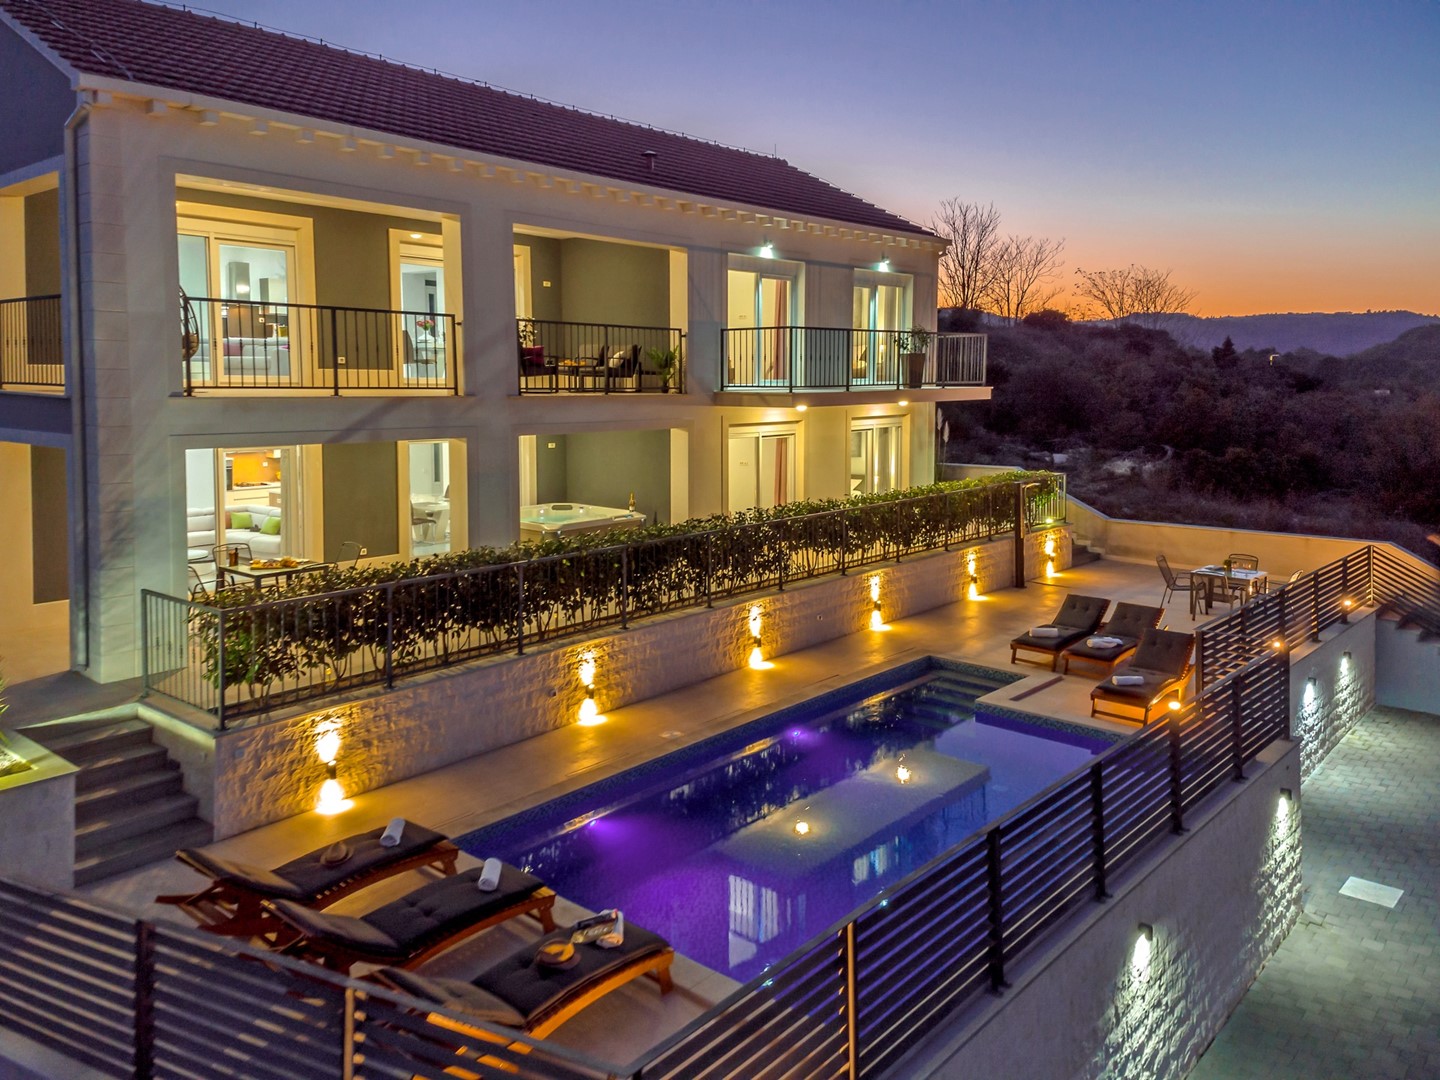 KORCULA - ORGON LUXURY VILLAS - Luxury villa Korcula Cataleya with pool, jacuzzi, 4 bedrooms, 12 pax, WIFI, parking